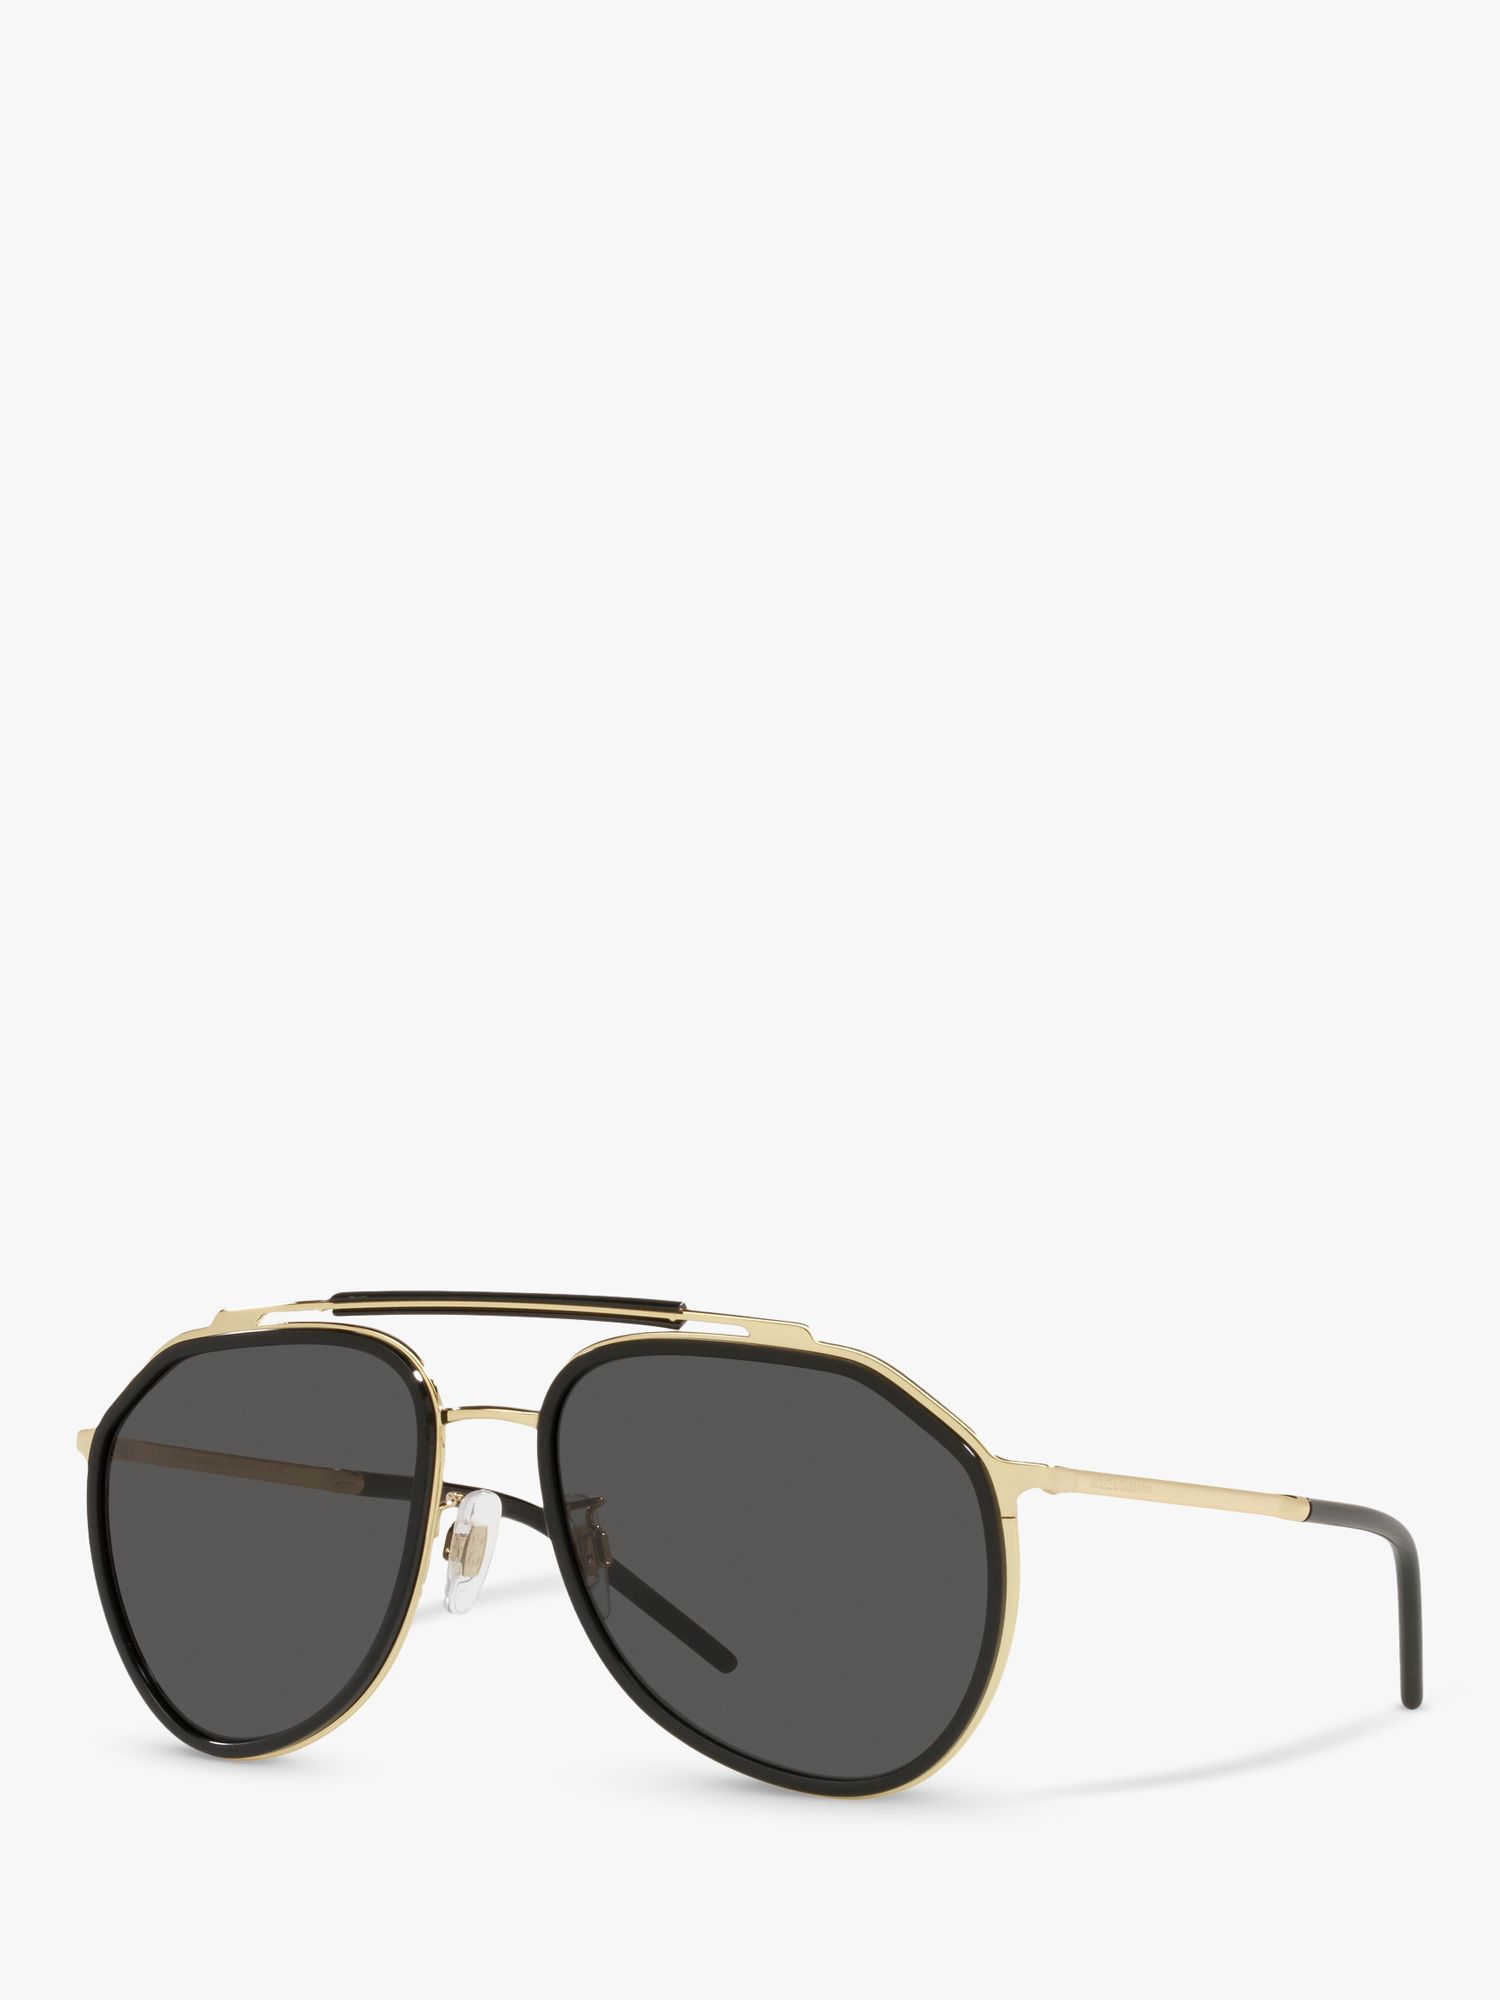 Dolce & Gabbana DG2277 Men's Aviator Sunglasses, Gold/Black, Gold/Black at  John Lewis & Partners